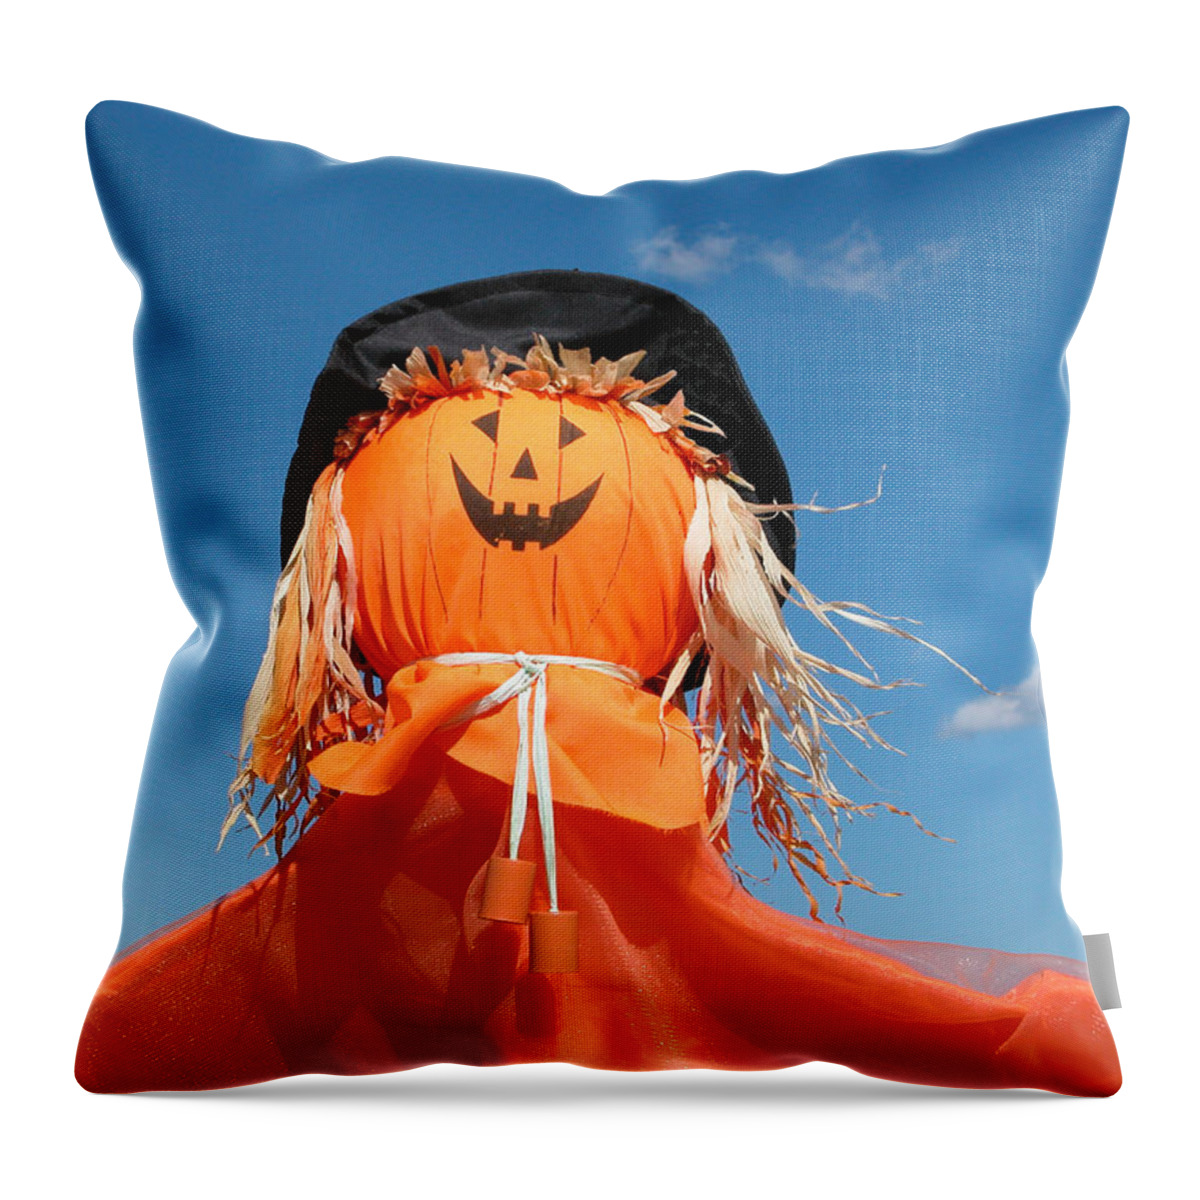 Pumpkin Throw Pillow featuring the photograph Happy Halloween by Cathy Kovarik